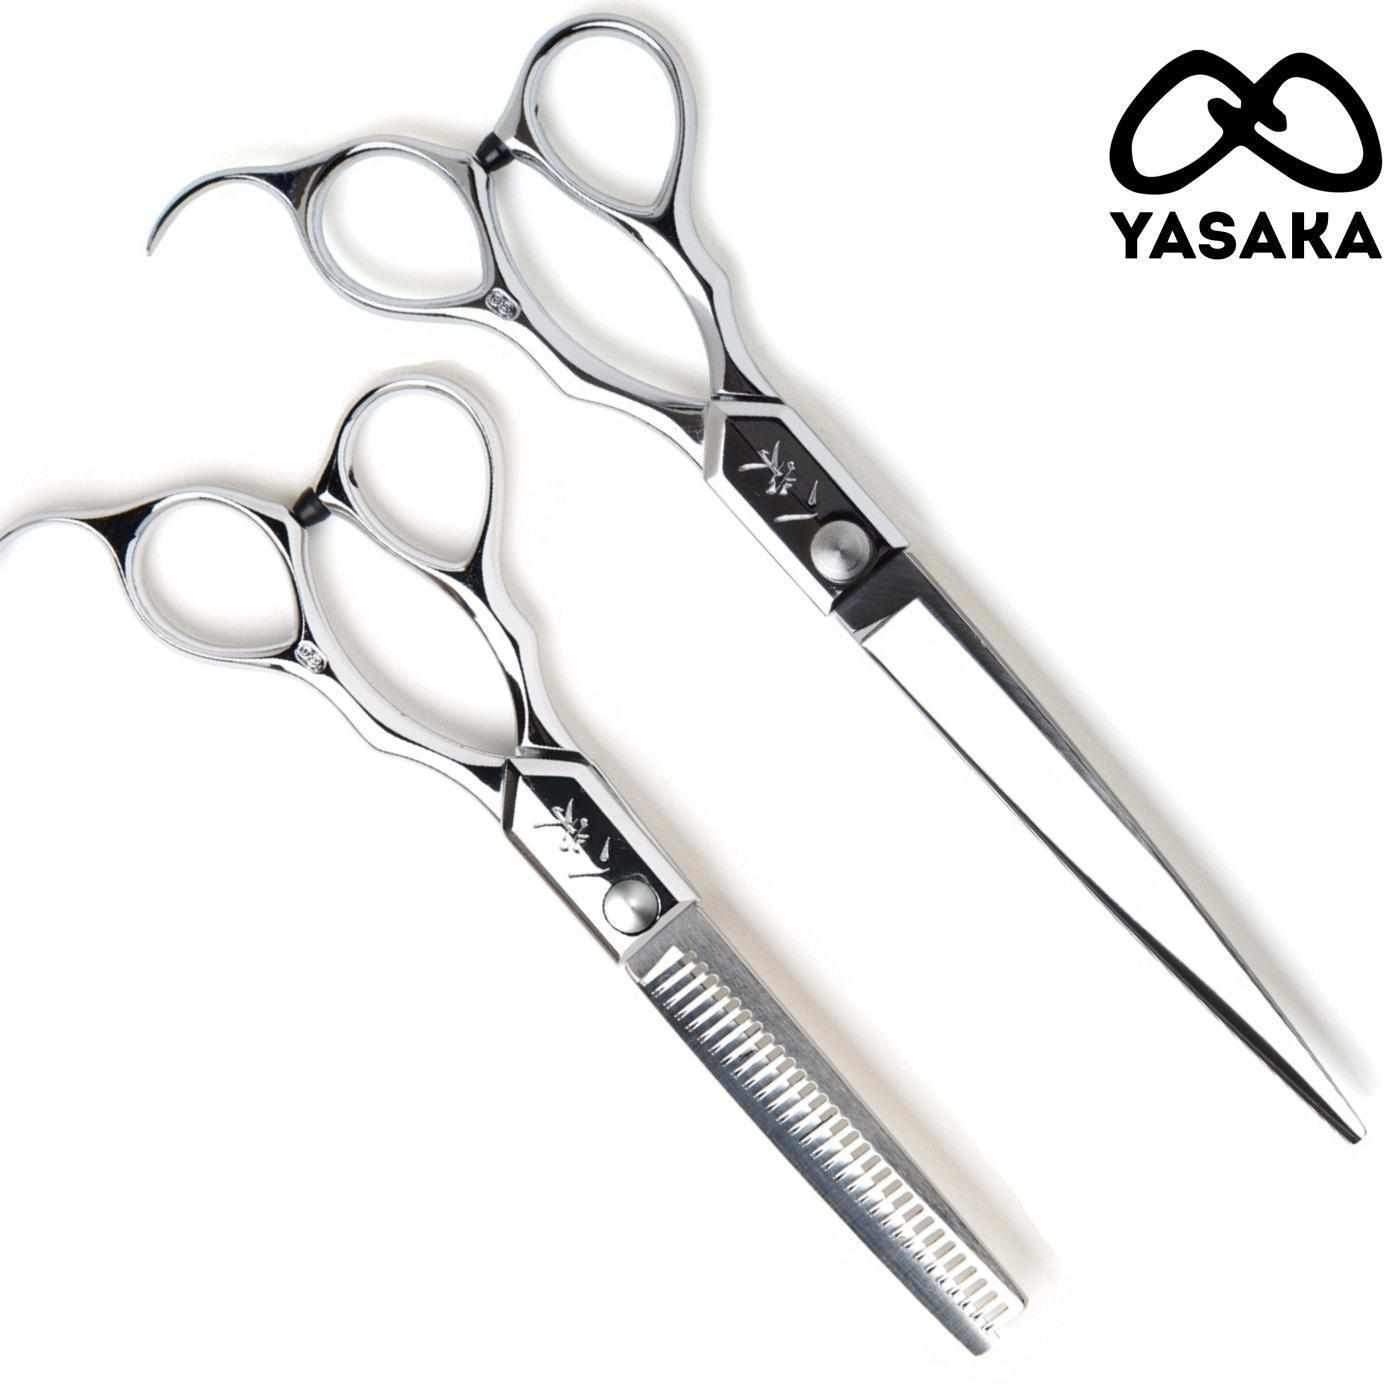 Yasaka Professional Barber Shears Set - Japan Scissors